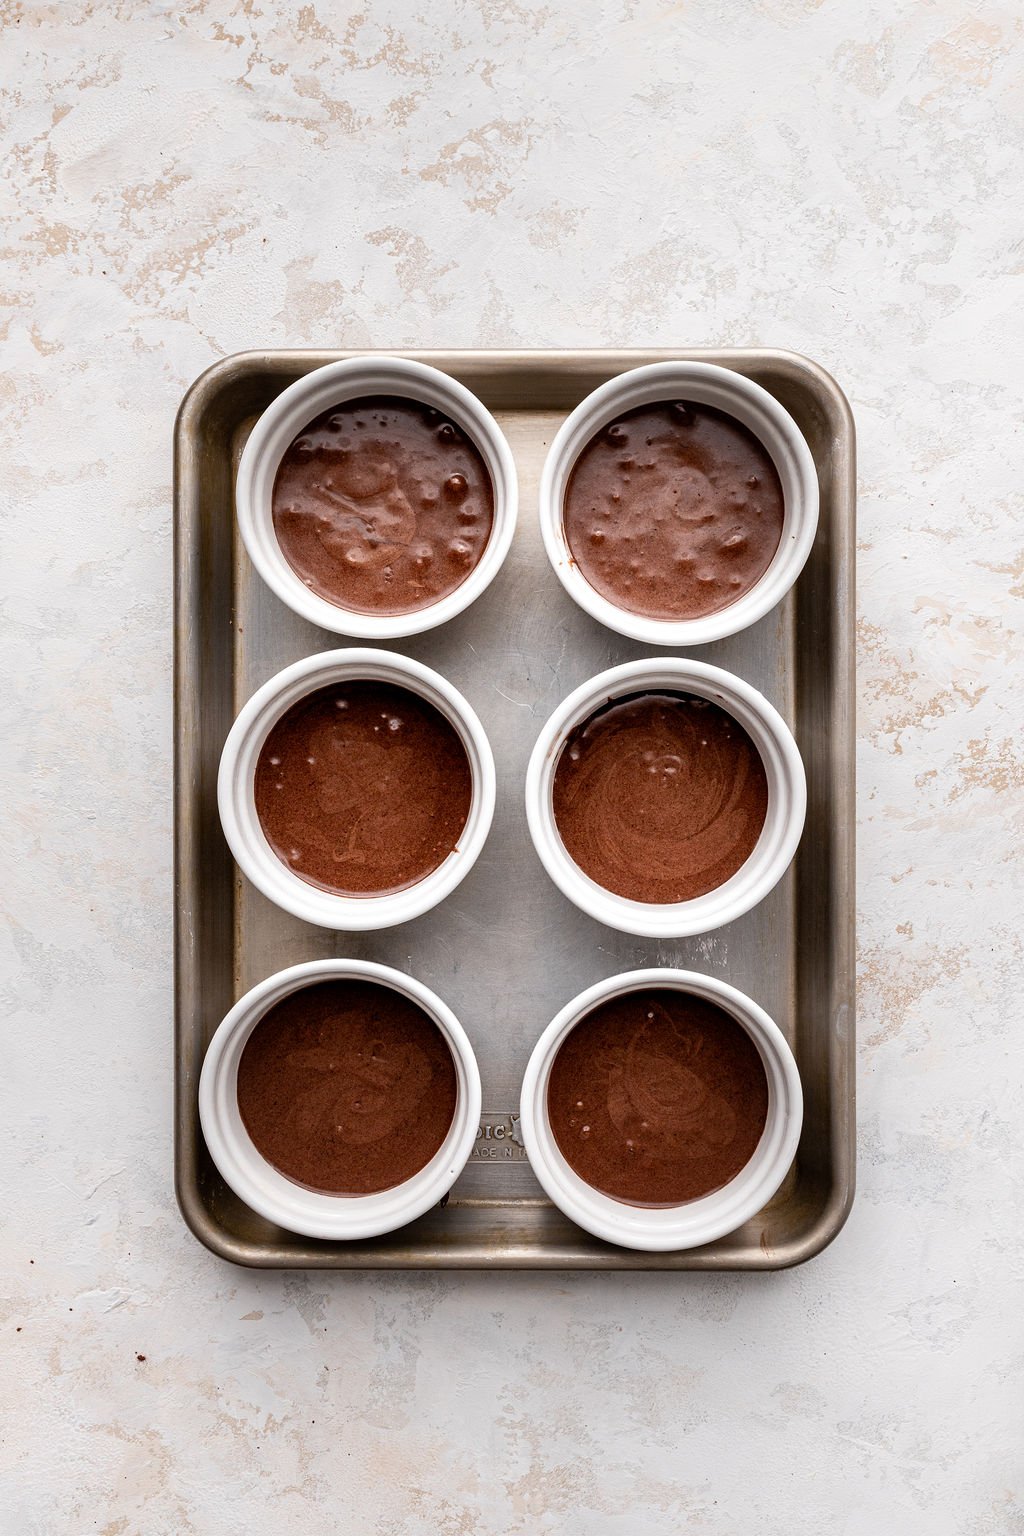 chocolate lava cakes in ramekins ready to bake.